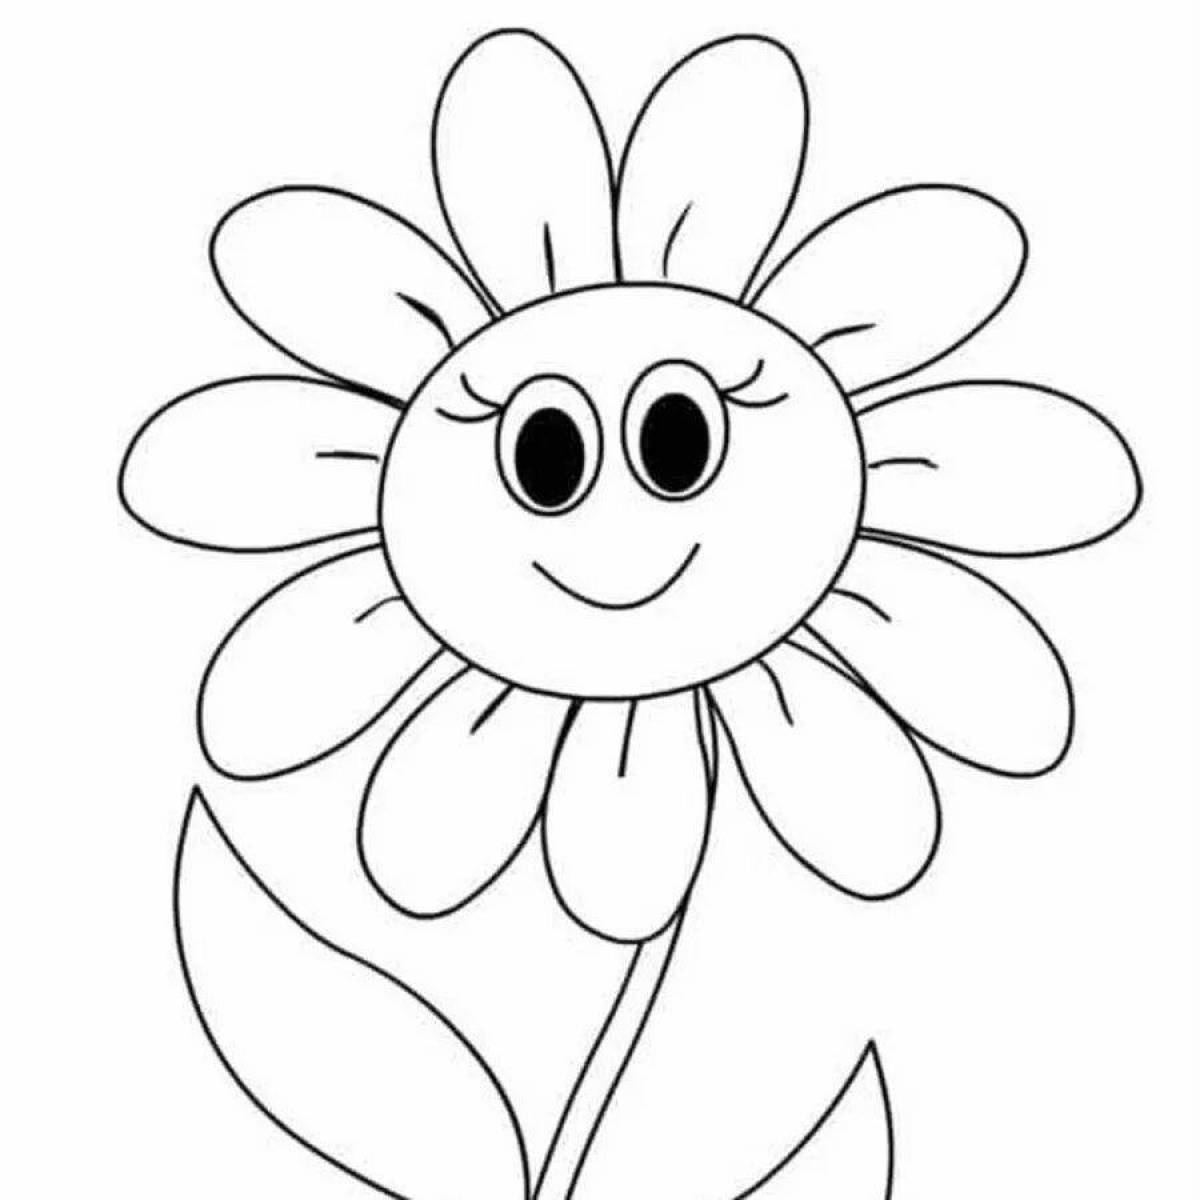 Live coloring flower for children